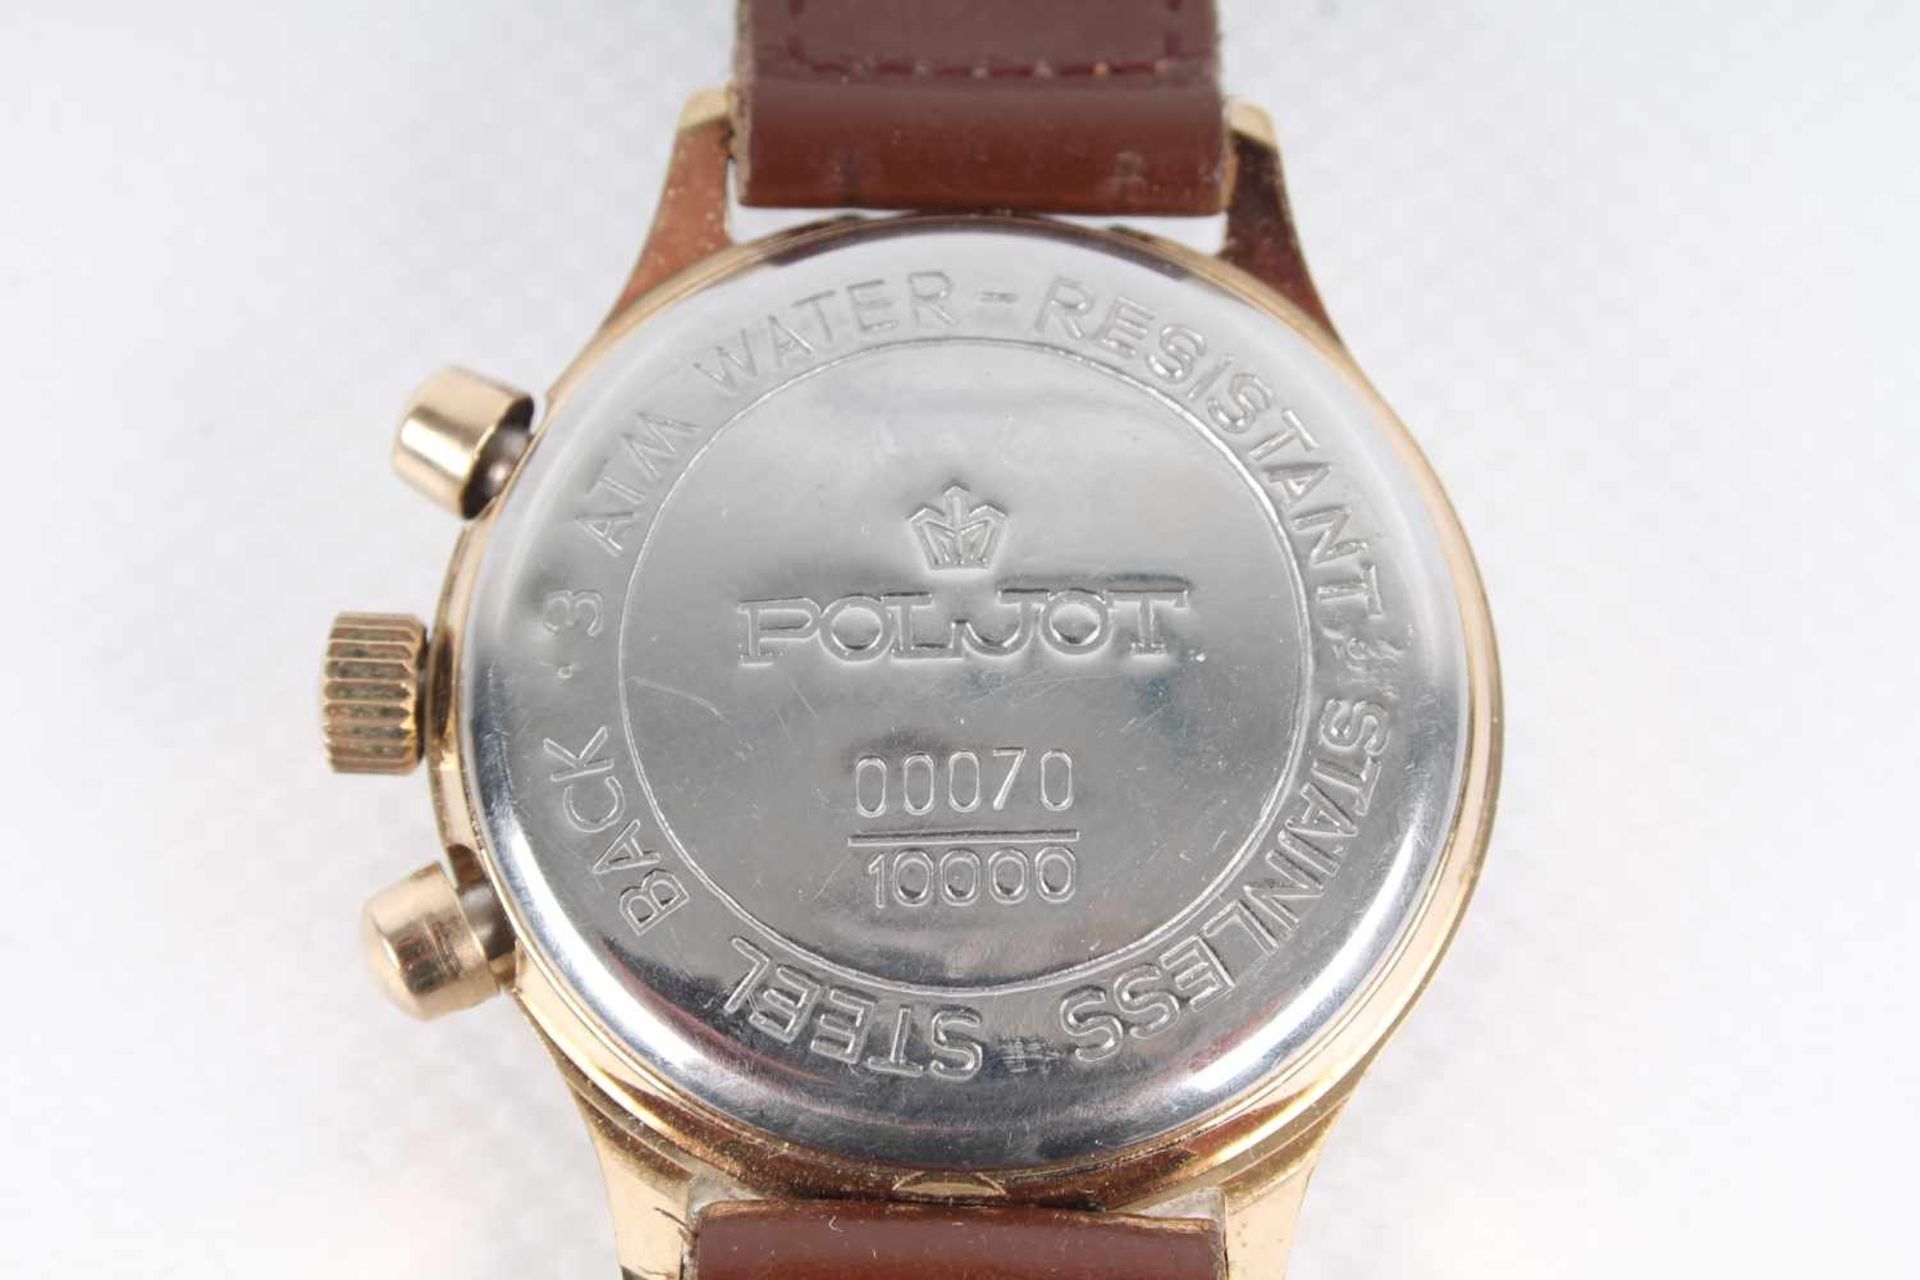 Chronograph Poljot Moscow Tokyo 1991, russian watch, - Image 5 of 5